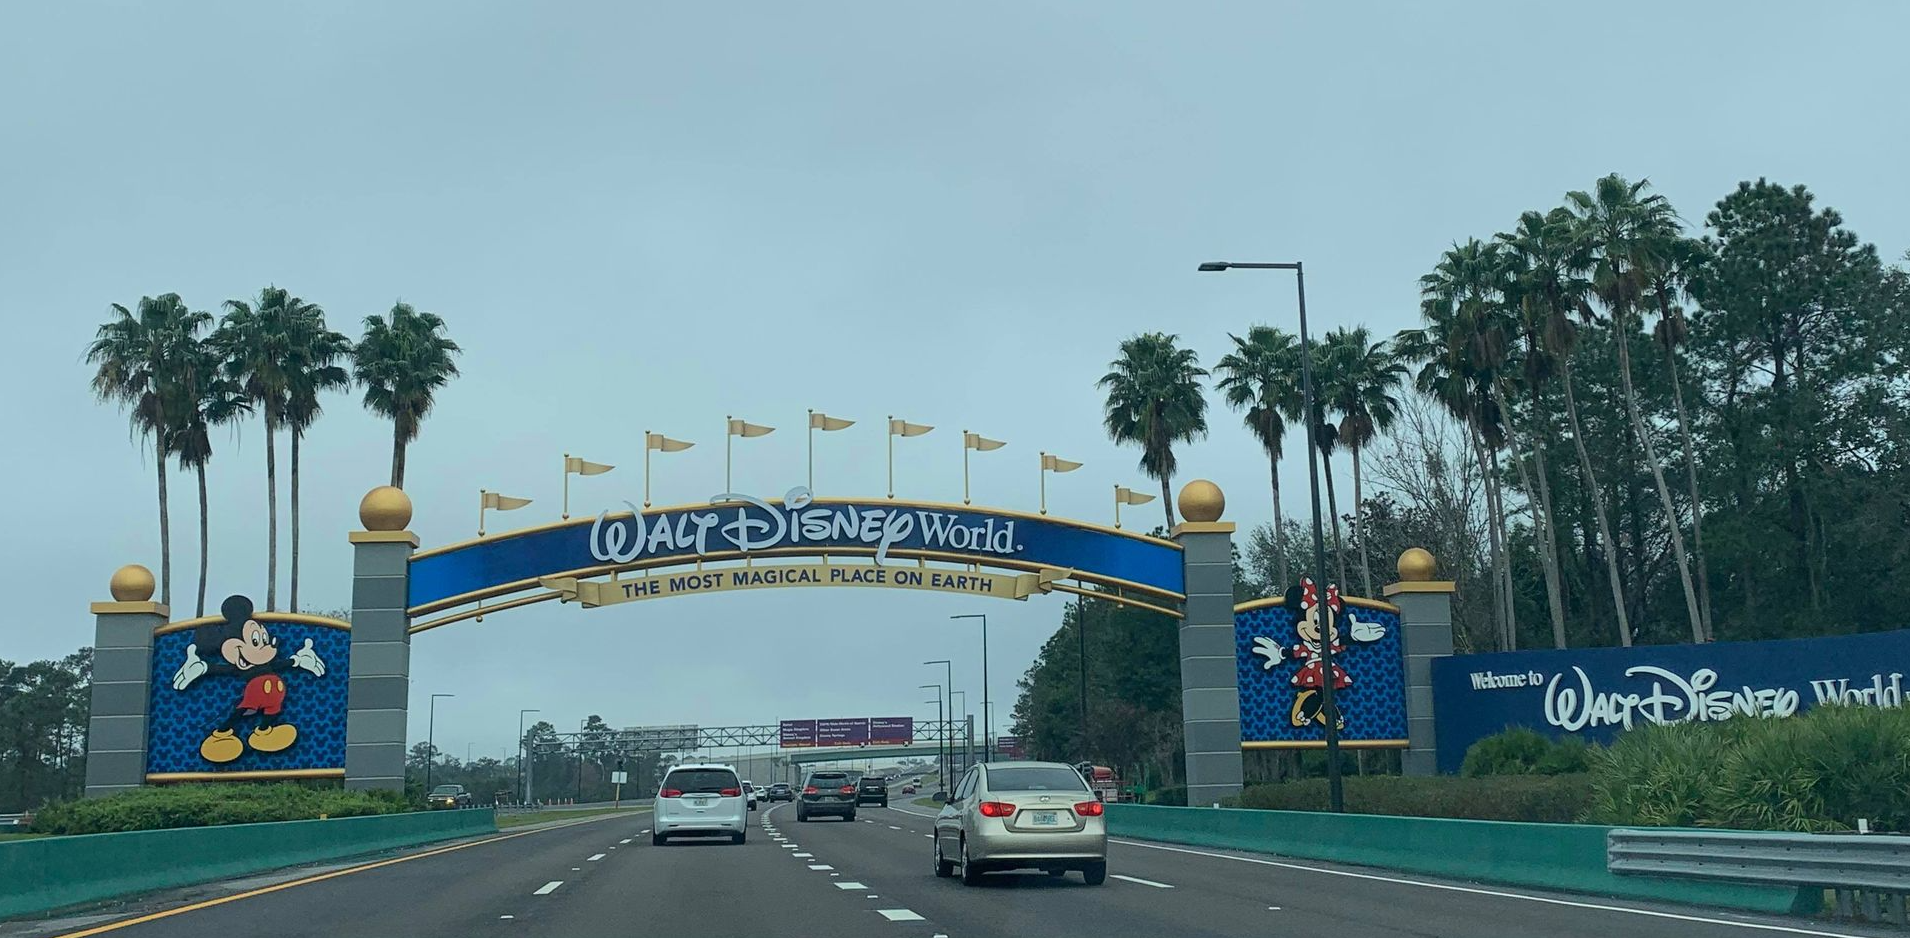 Welcome to Walt Disney World sign refurbishment now complete